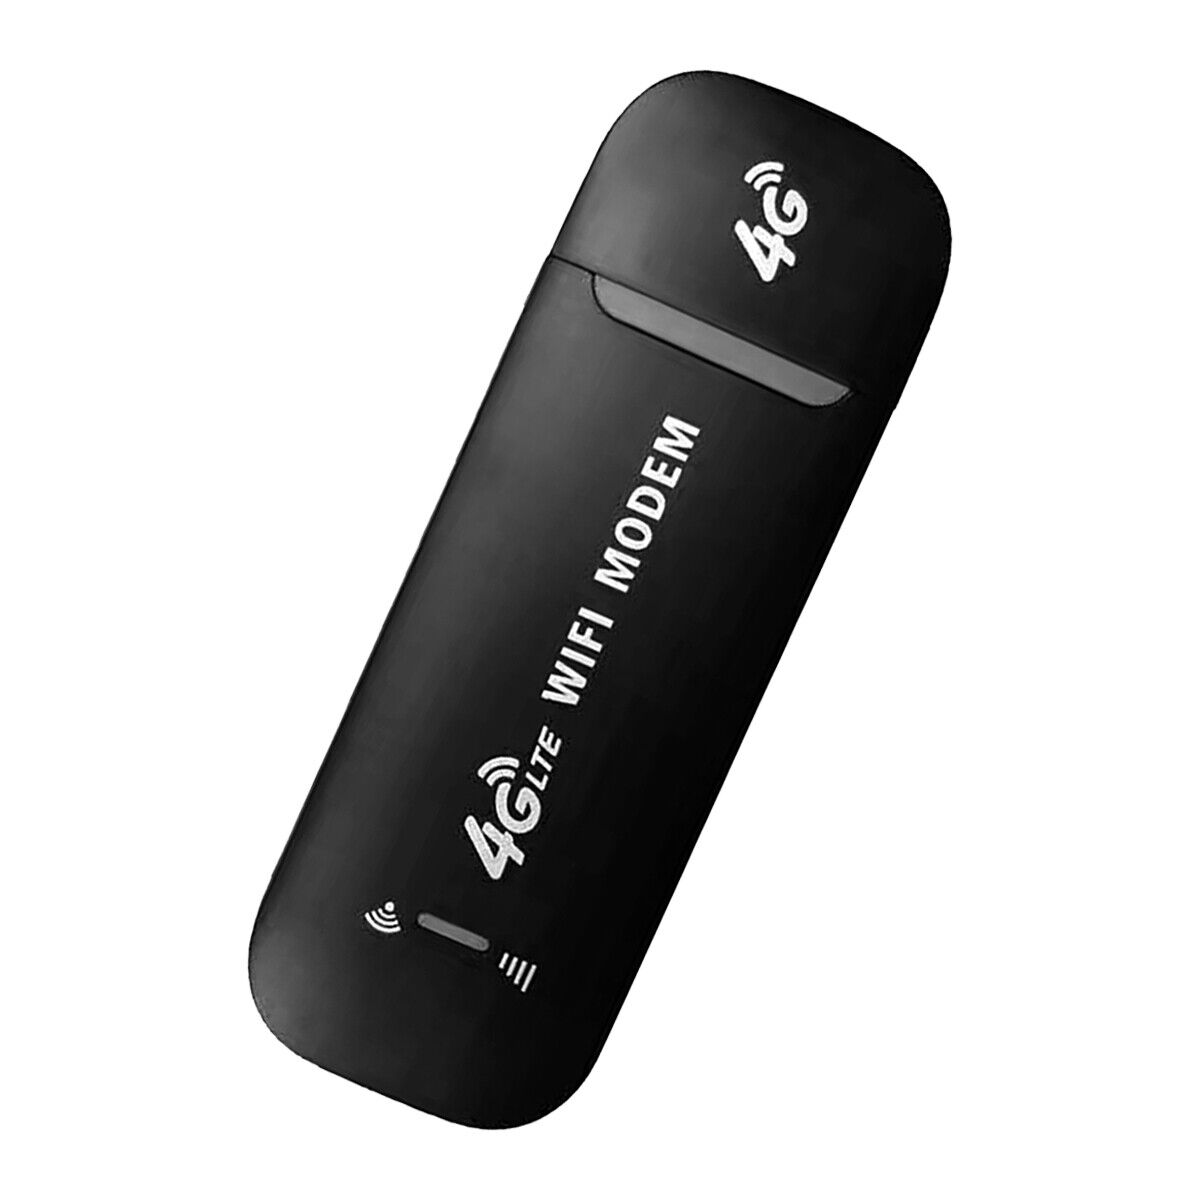 4G LTE WiFi USB Dongle Unlocked Modem Stick Wireless Adapter Card Hotspot Router